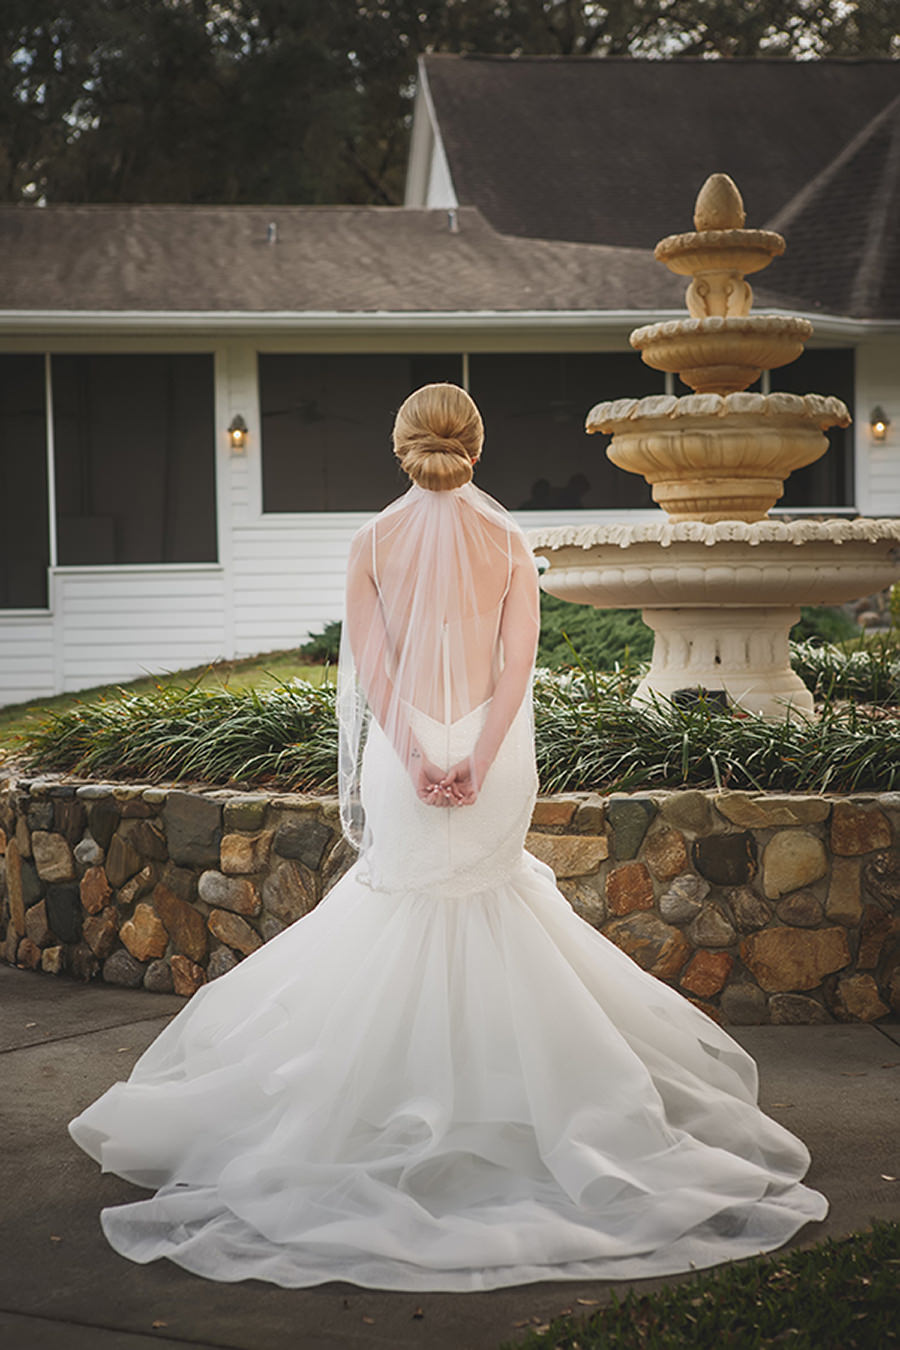 Outdoor Garden Bridal Portrait wearing Mermaid Pnina Tornai Wedding Dress | Tampa Bay Wedding Venue The Lange Farm | Photographer Brian C Idocks Photographics